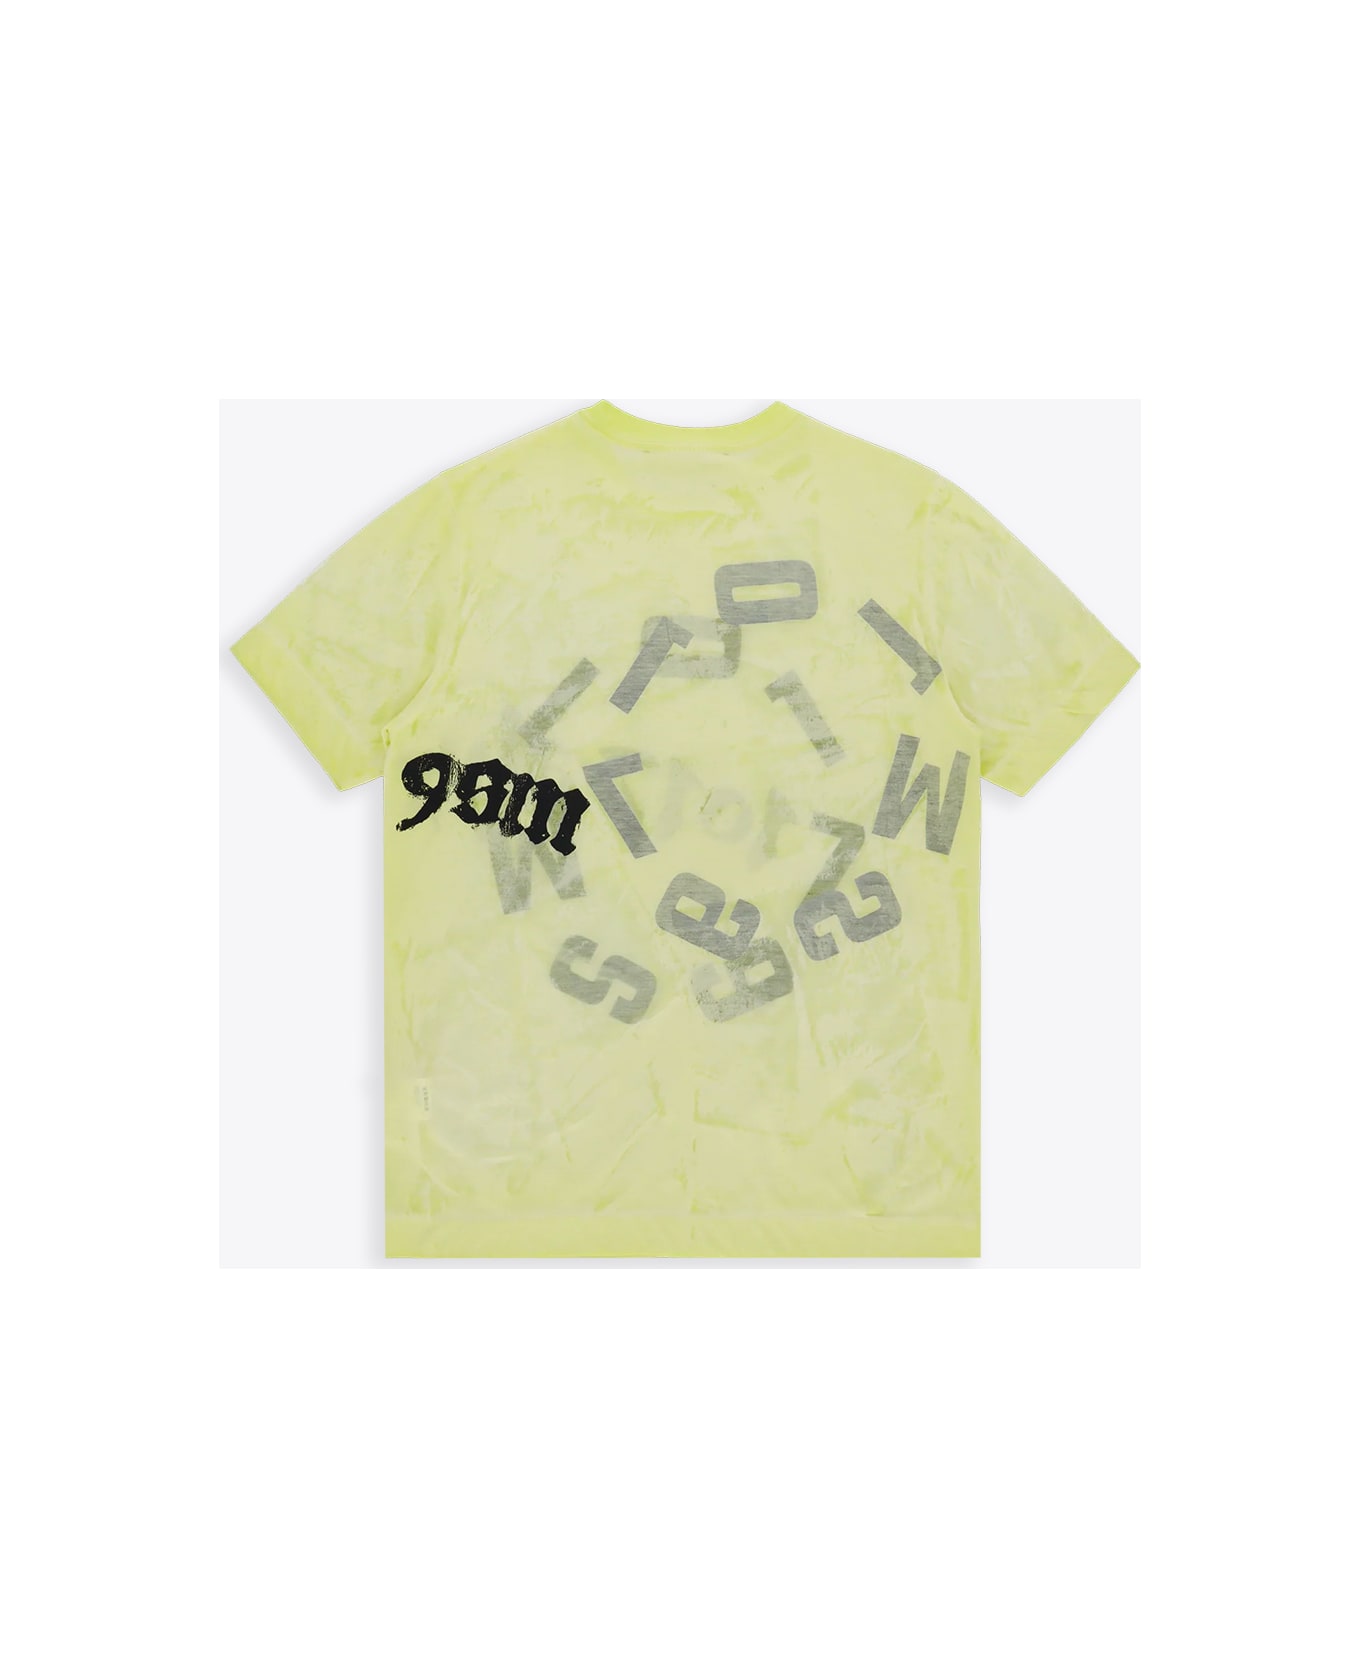 1017 ALYX 9SM Translucent Graphic S/s T-shirt Neon Yellow Cotton Translucent T-shirt - Translucent Graphic S/s T-shirt - Giallo Tシャツ